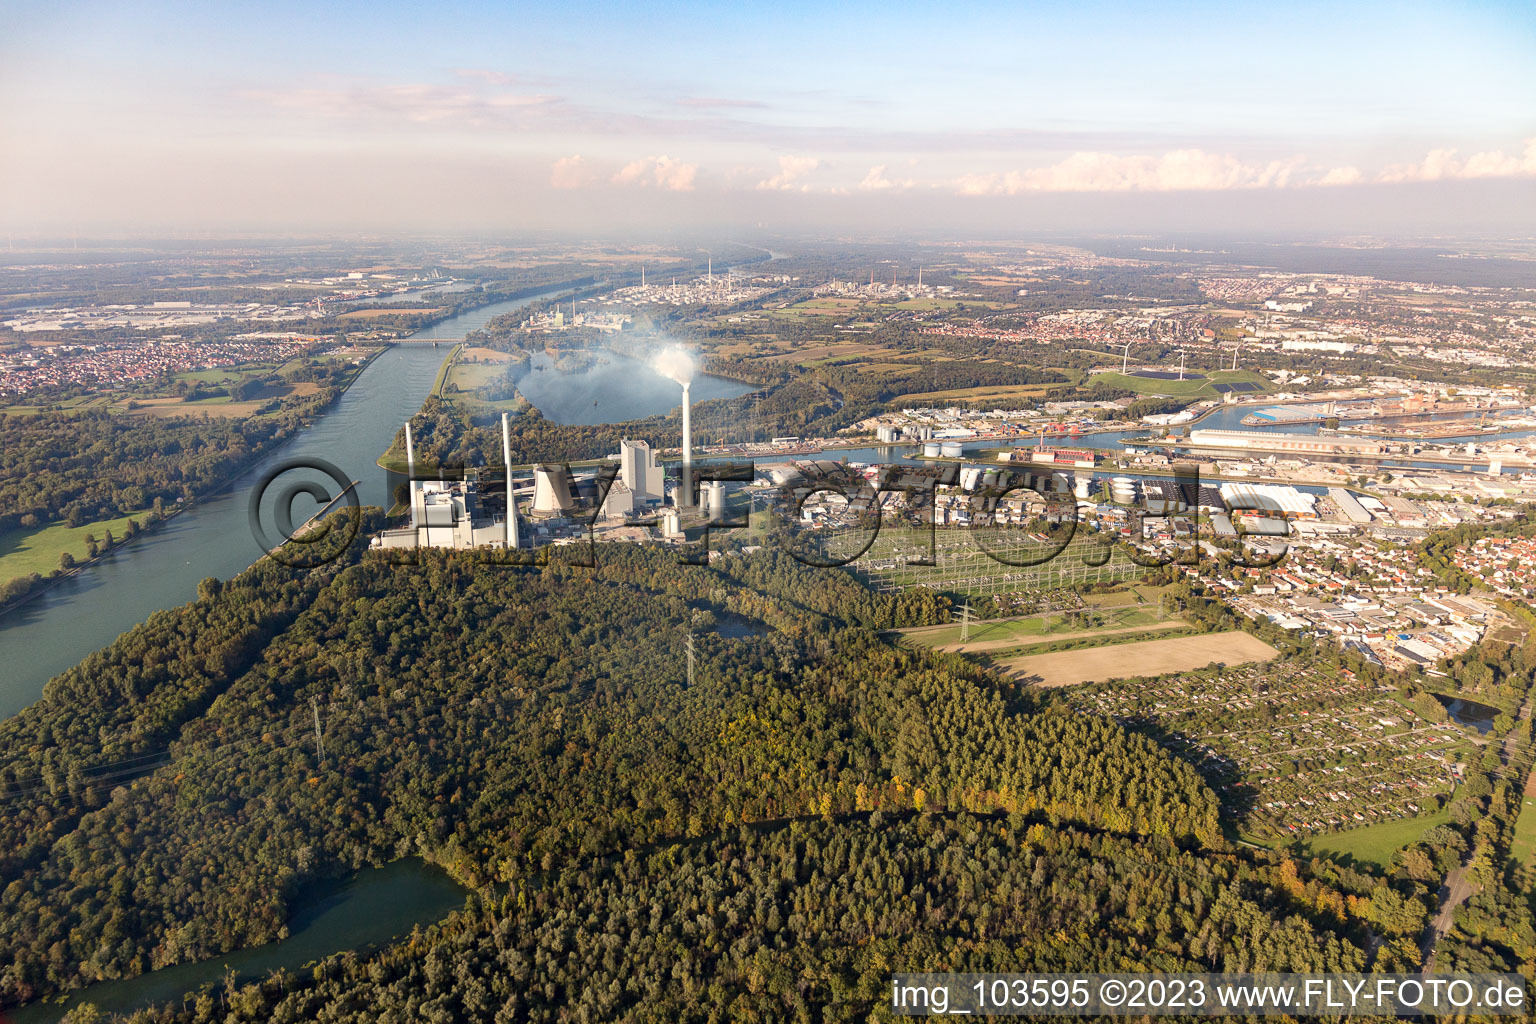 Coal-fired power plant on Rheinhafen in the district Rheinhafen in Karlsruhe in the state Baden-Wuerttemberg, Germany